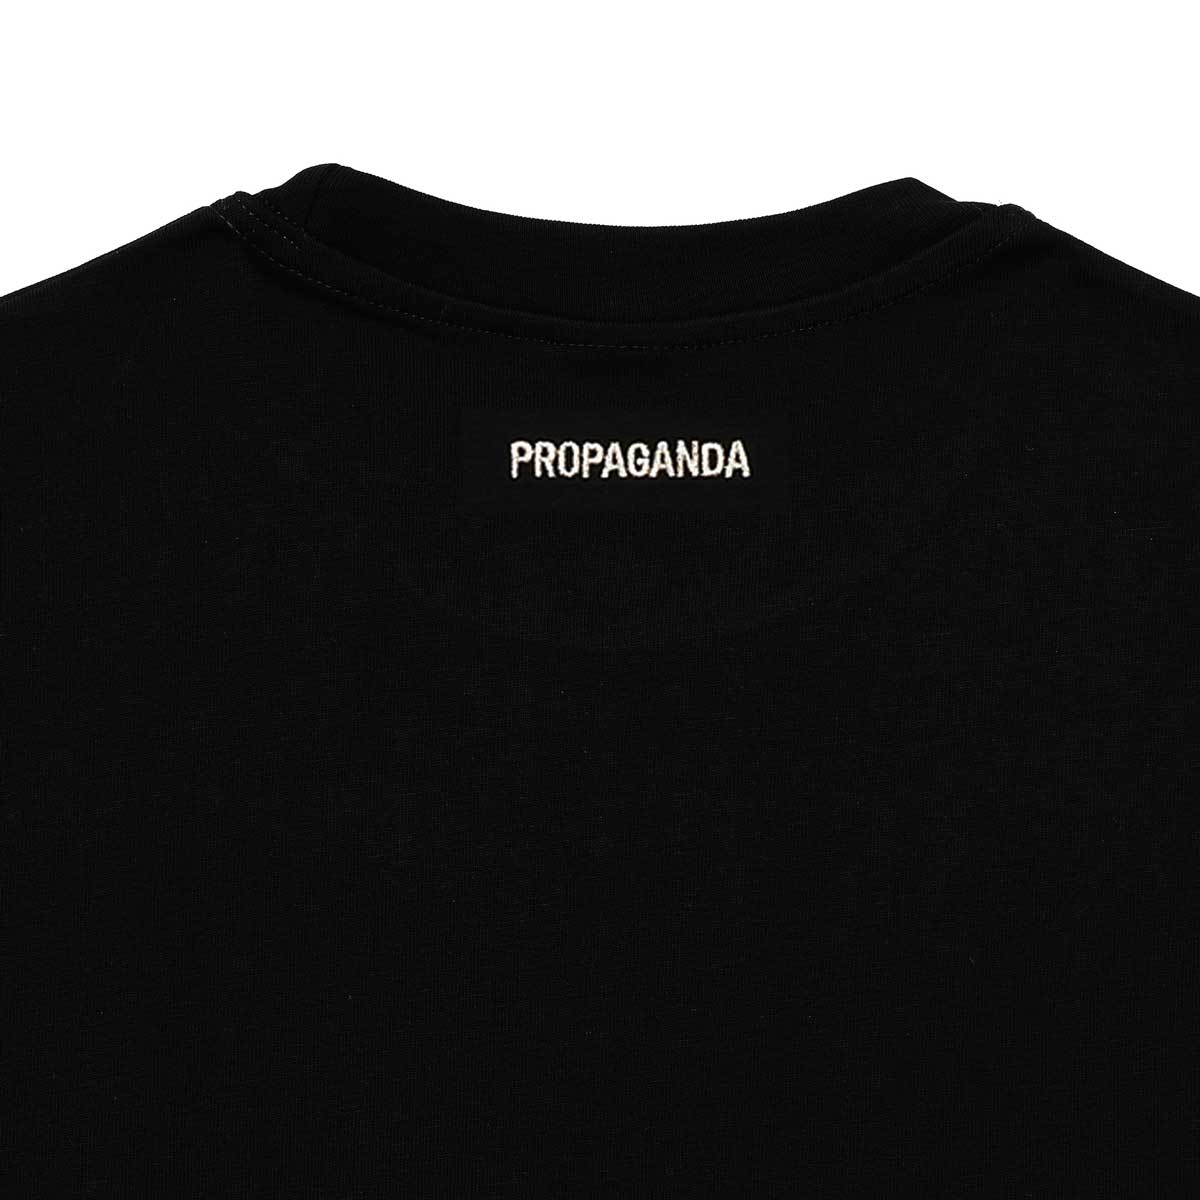 PRTS405 - T-Shirt and Polo - Propaganda